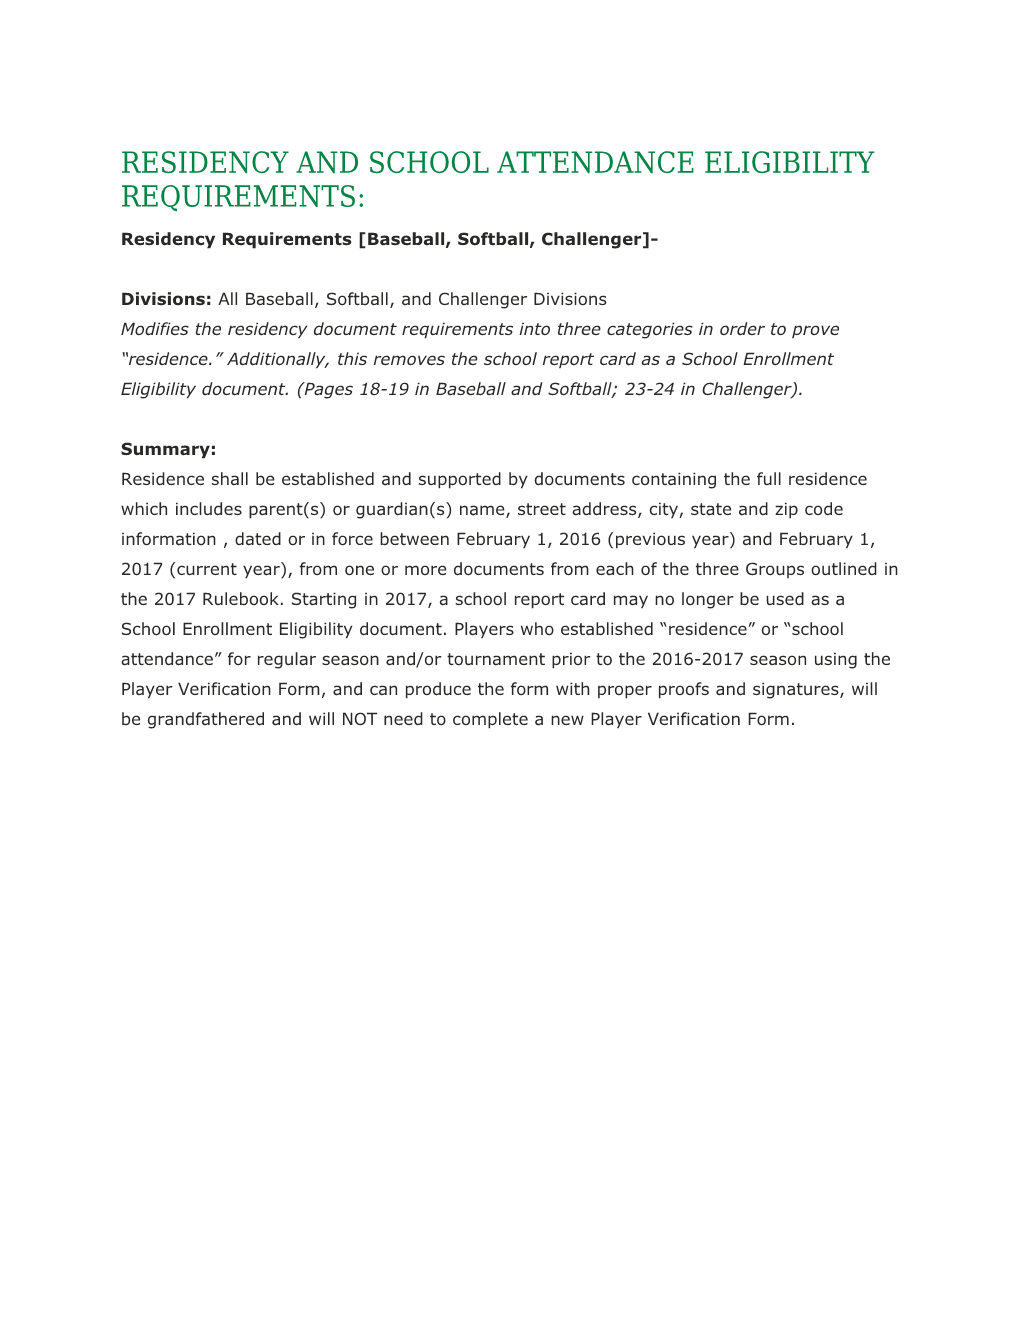 Residency Requirements Baseball, Softball, Challenger